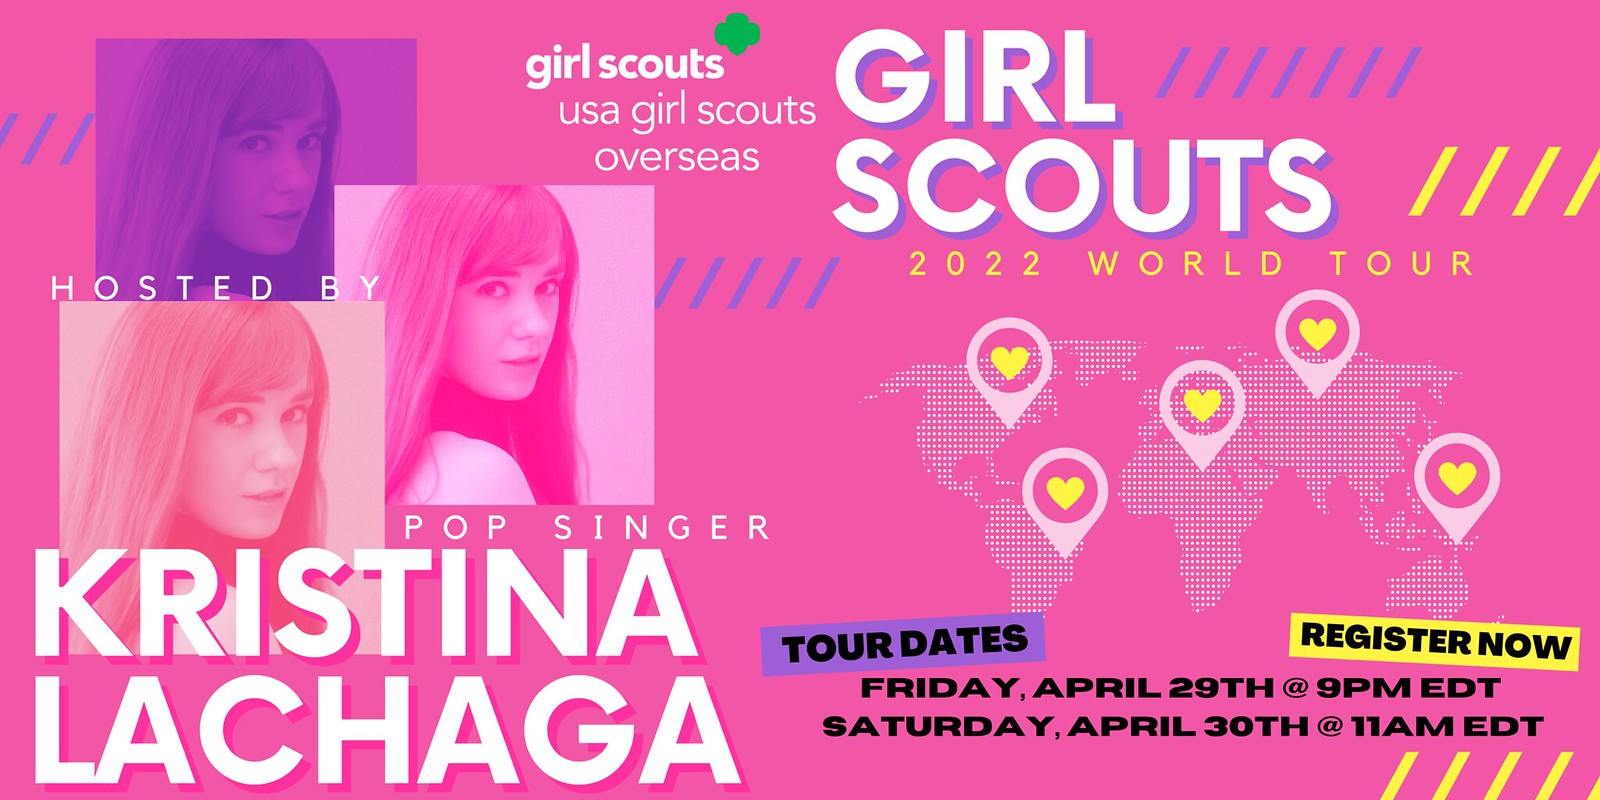 USA Girl Scouts Overseas' Girl Scout World Tour with Kristina Lachaga